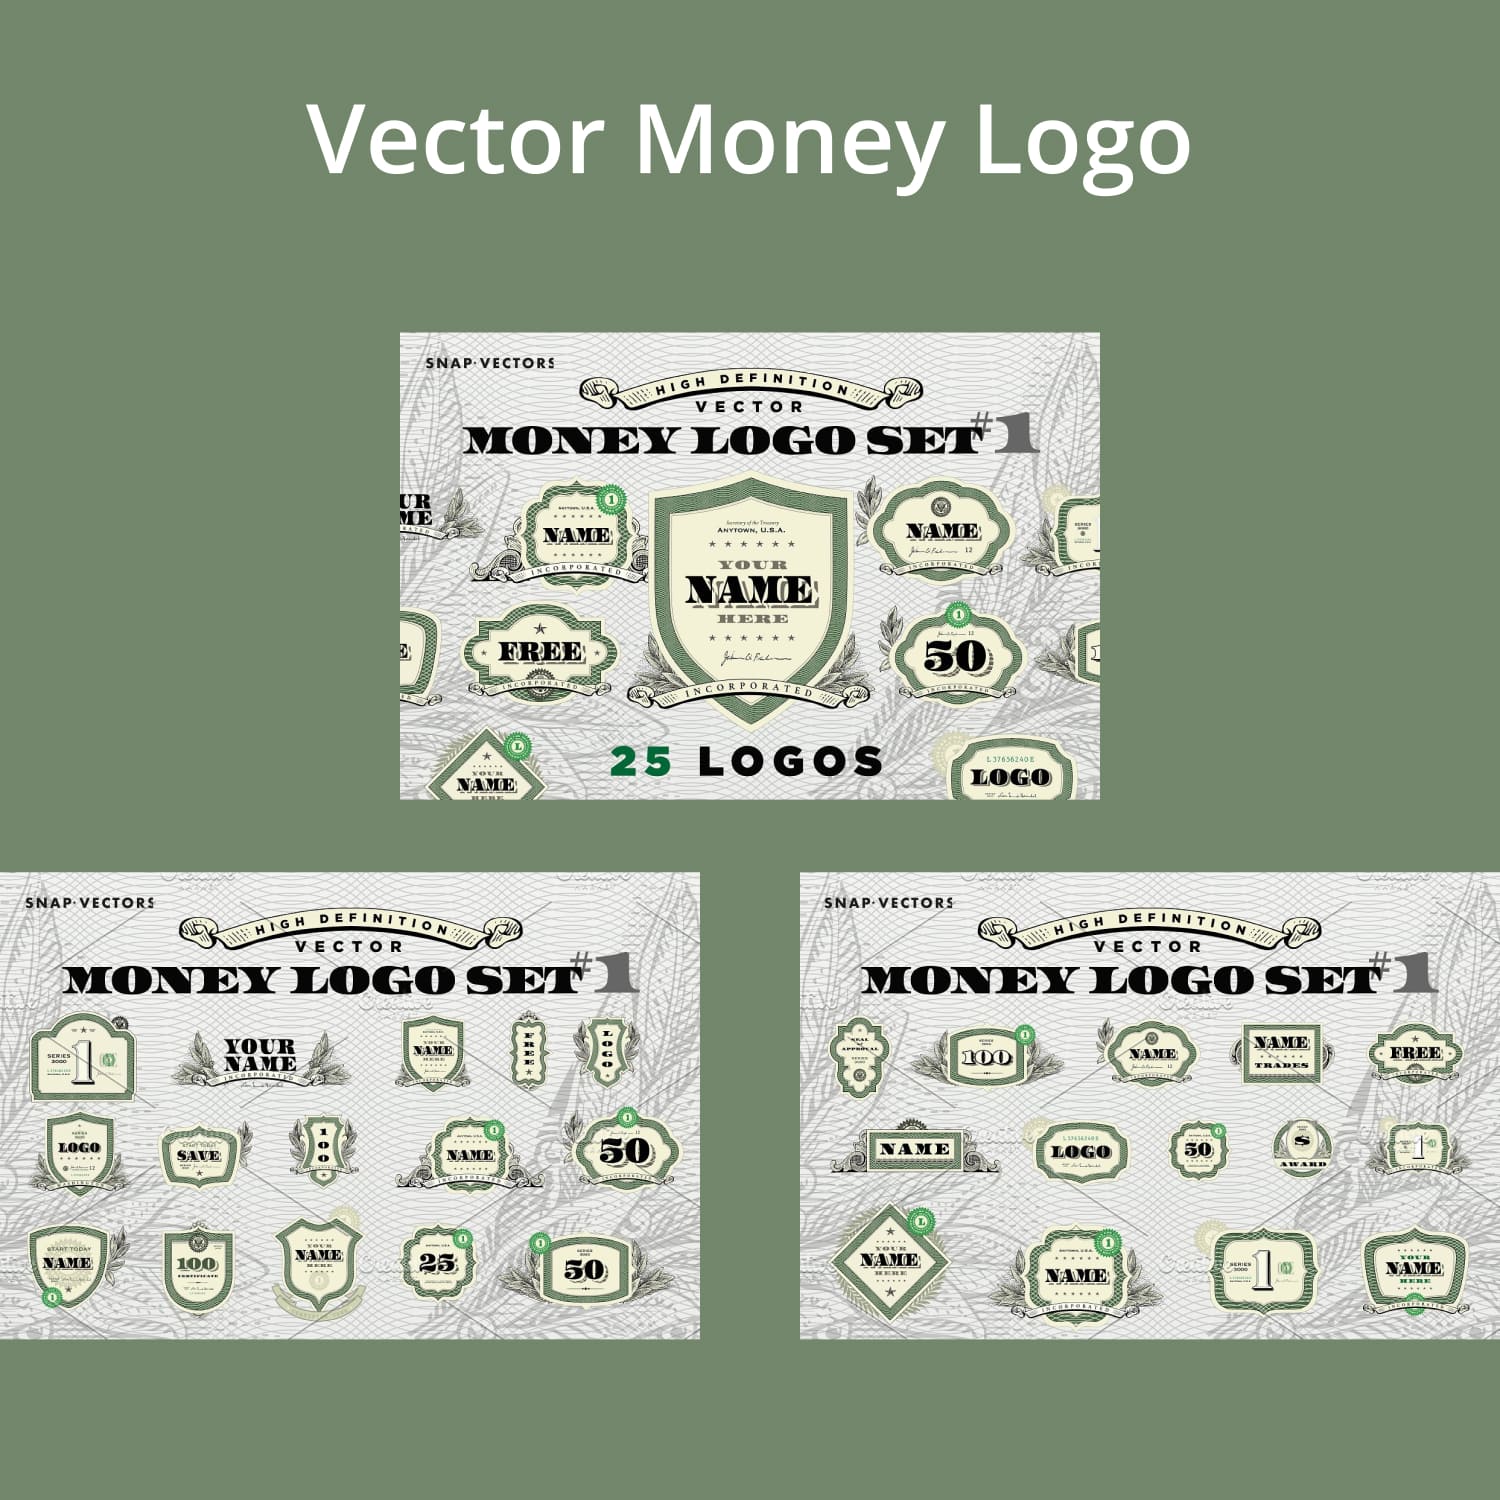 Vector Money Logo Set #1.